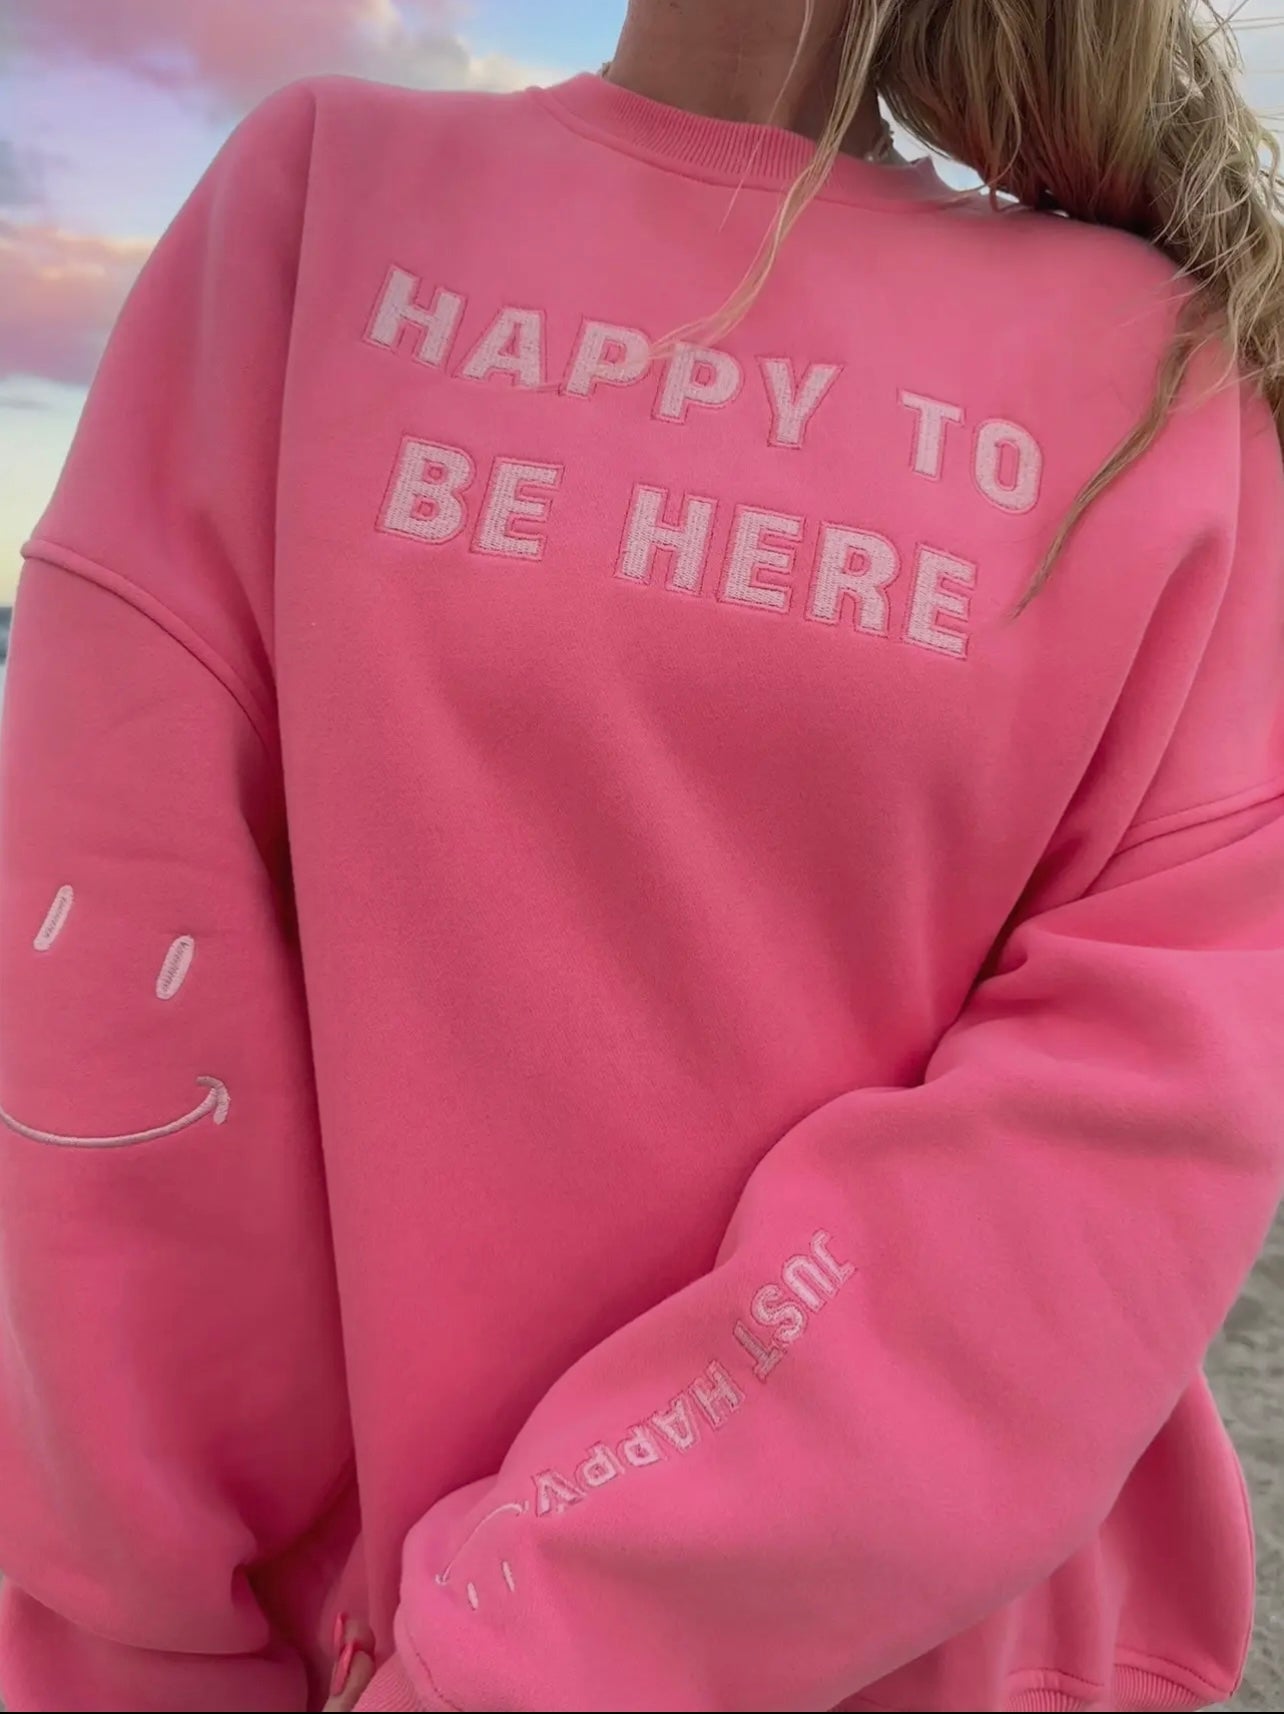 I’m Just Happy To Be Here Sweatshirt